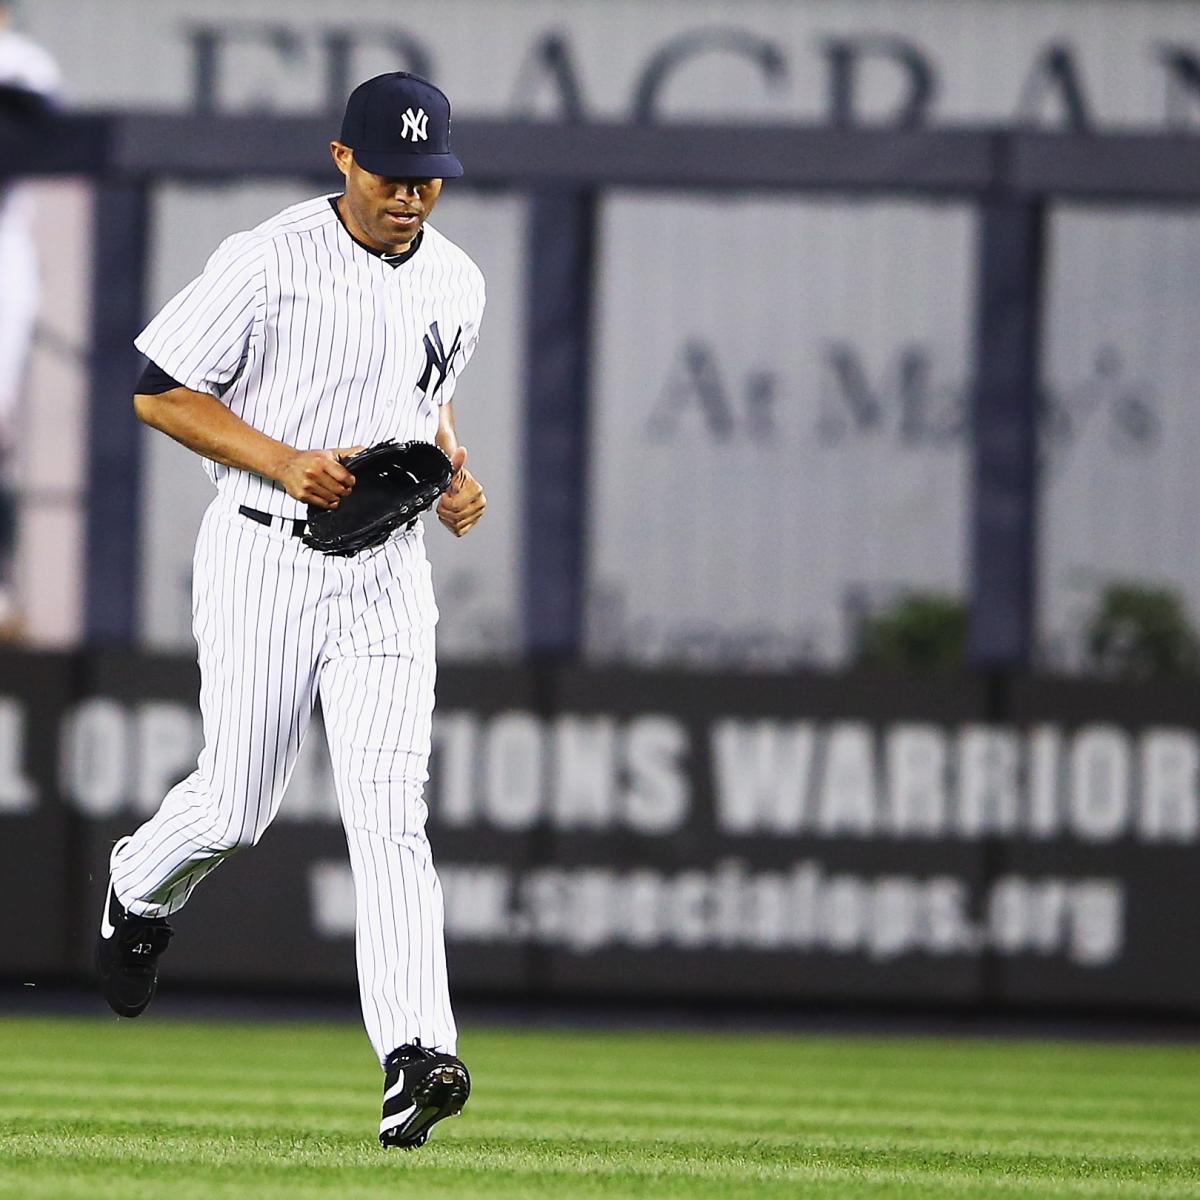 Official Mariano Rivera New York Yankees Jersey, Mariano Rivera